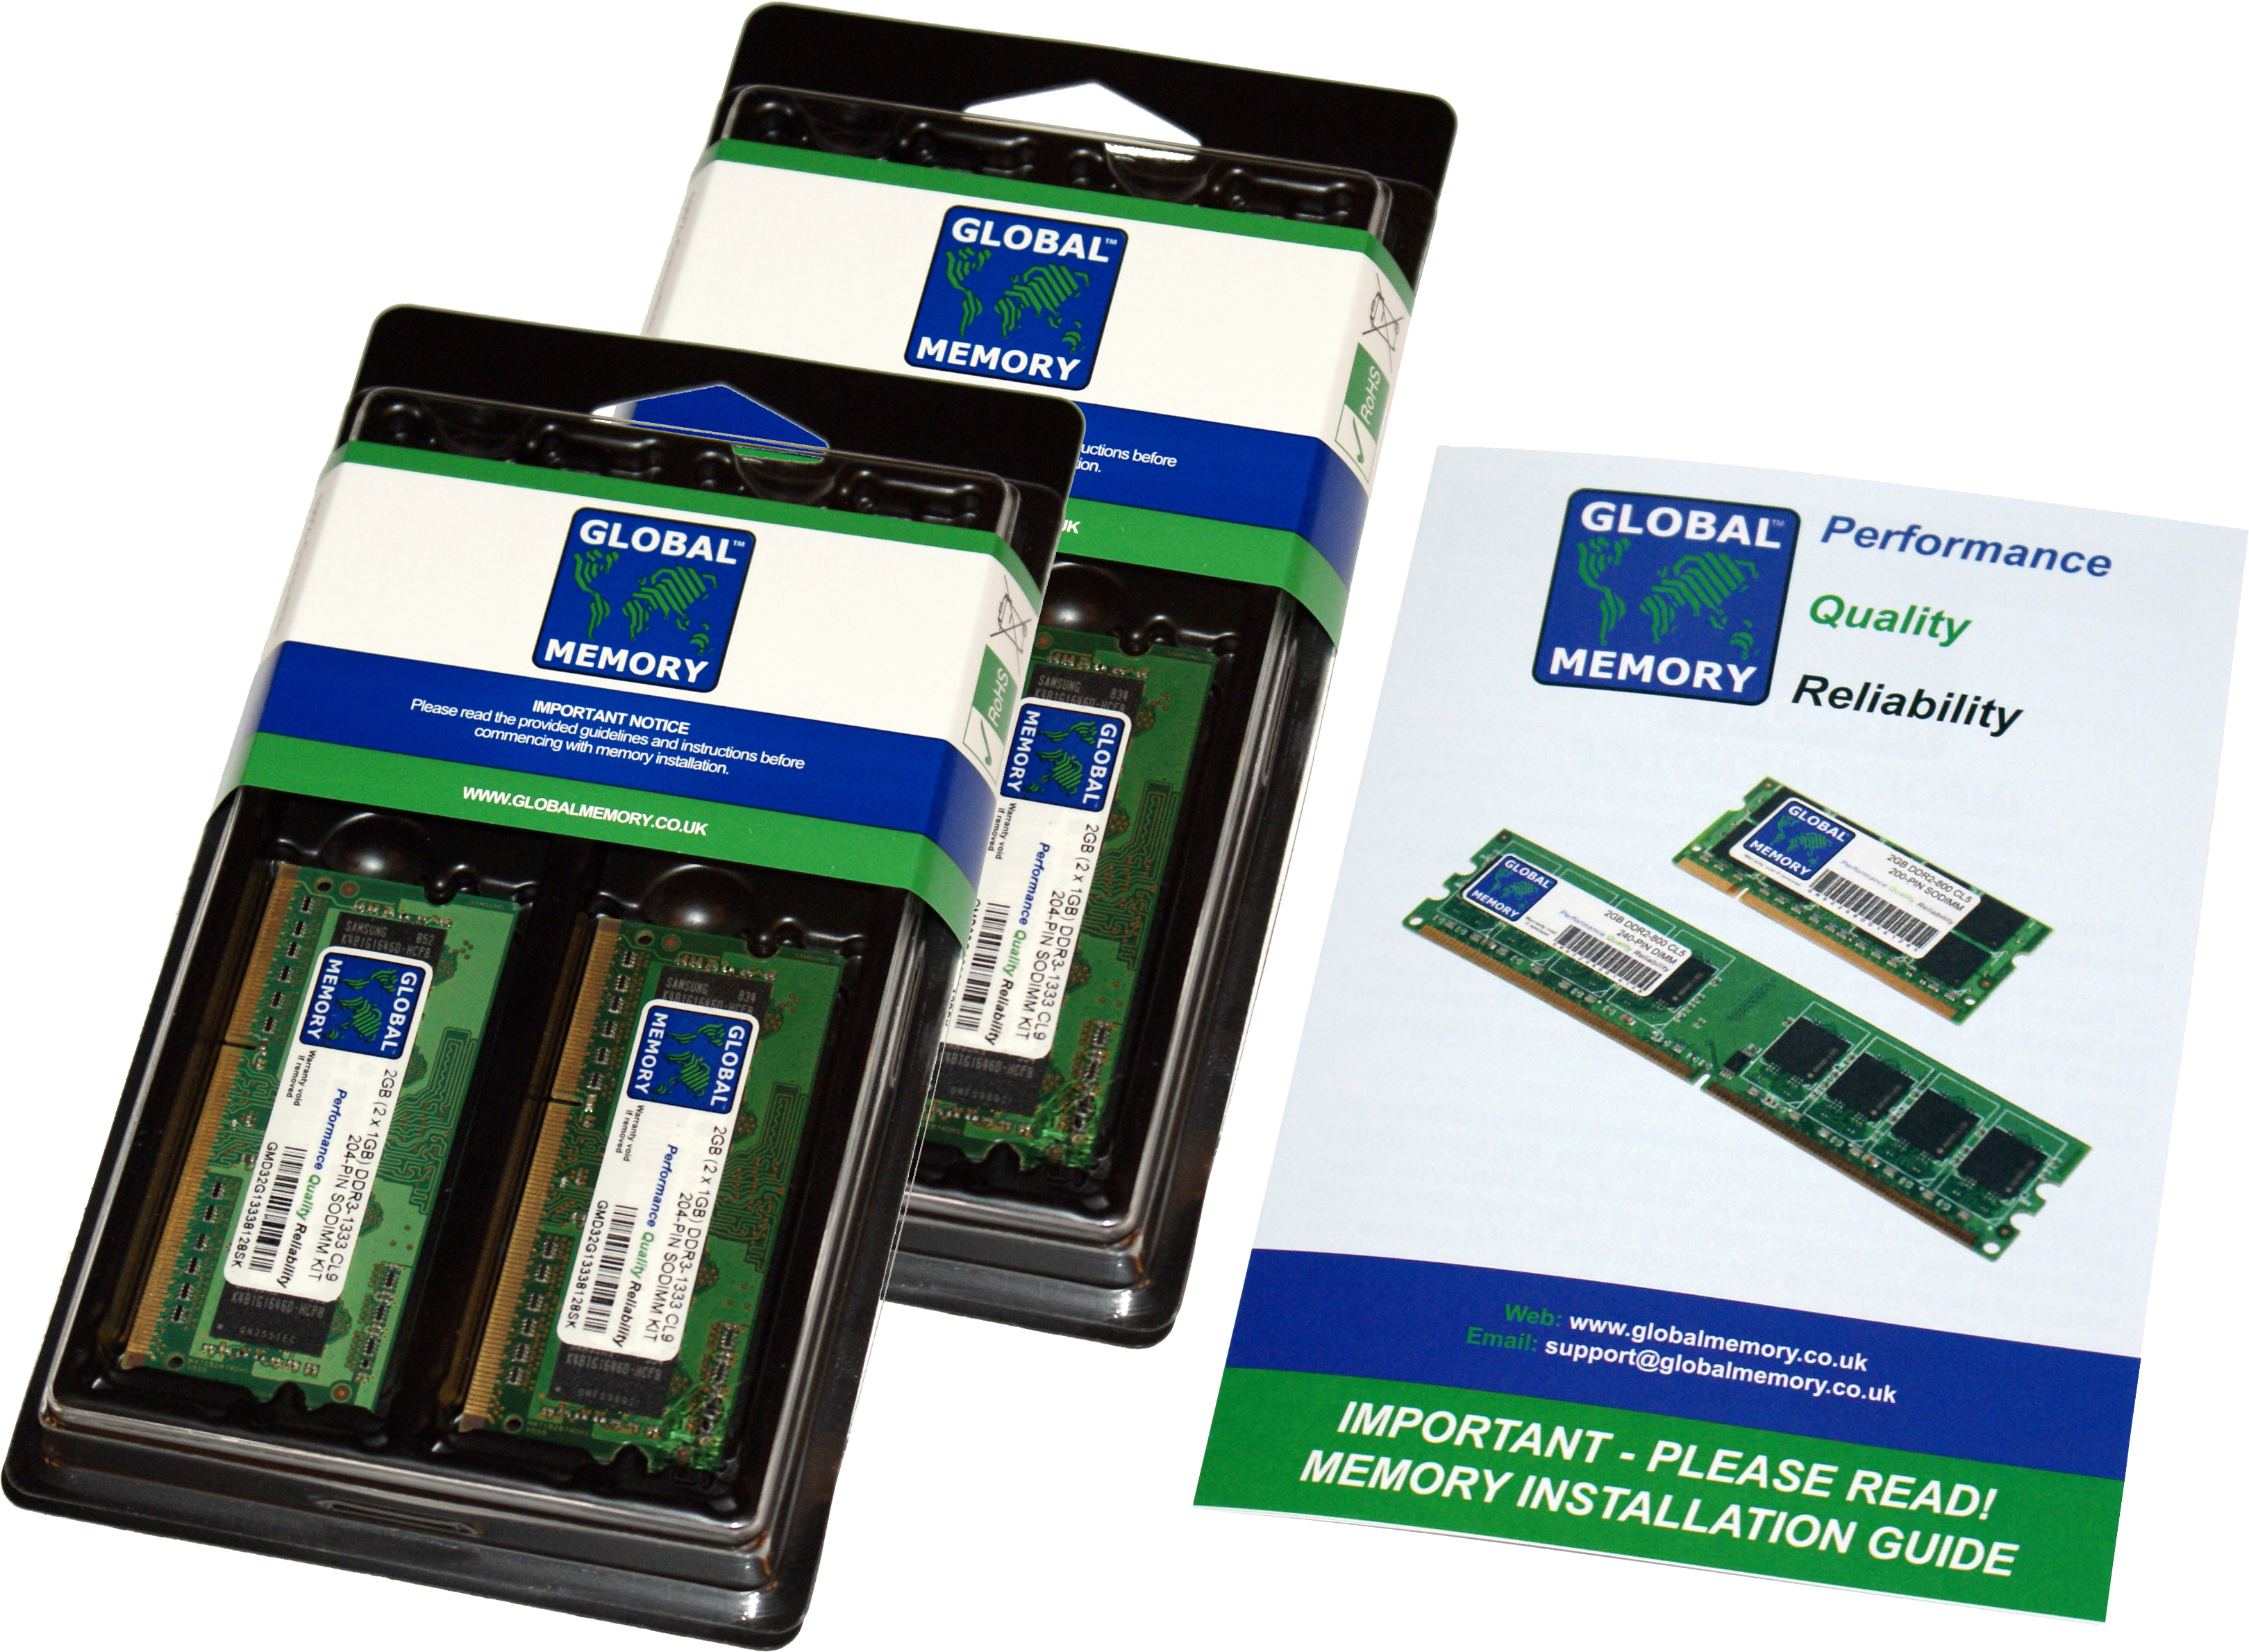 16GB (4 x 4GB) DDR4 2666MHz PC4-21300 260-PIN SODIMM MEMORY RAM KIT FOR DELL LAPTOPS/NOTEBOOKS